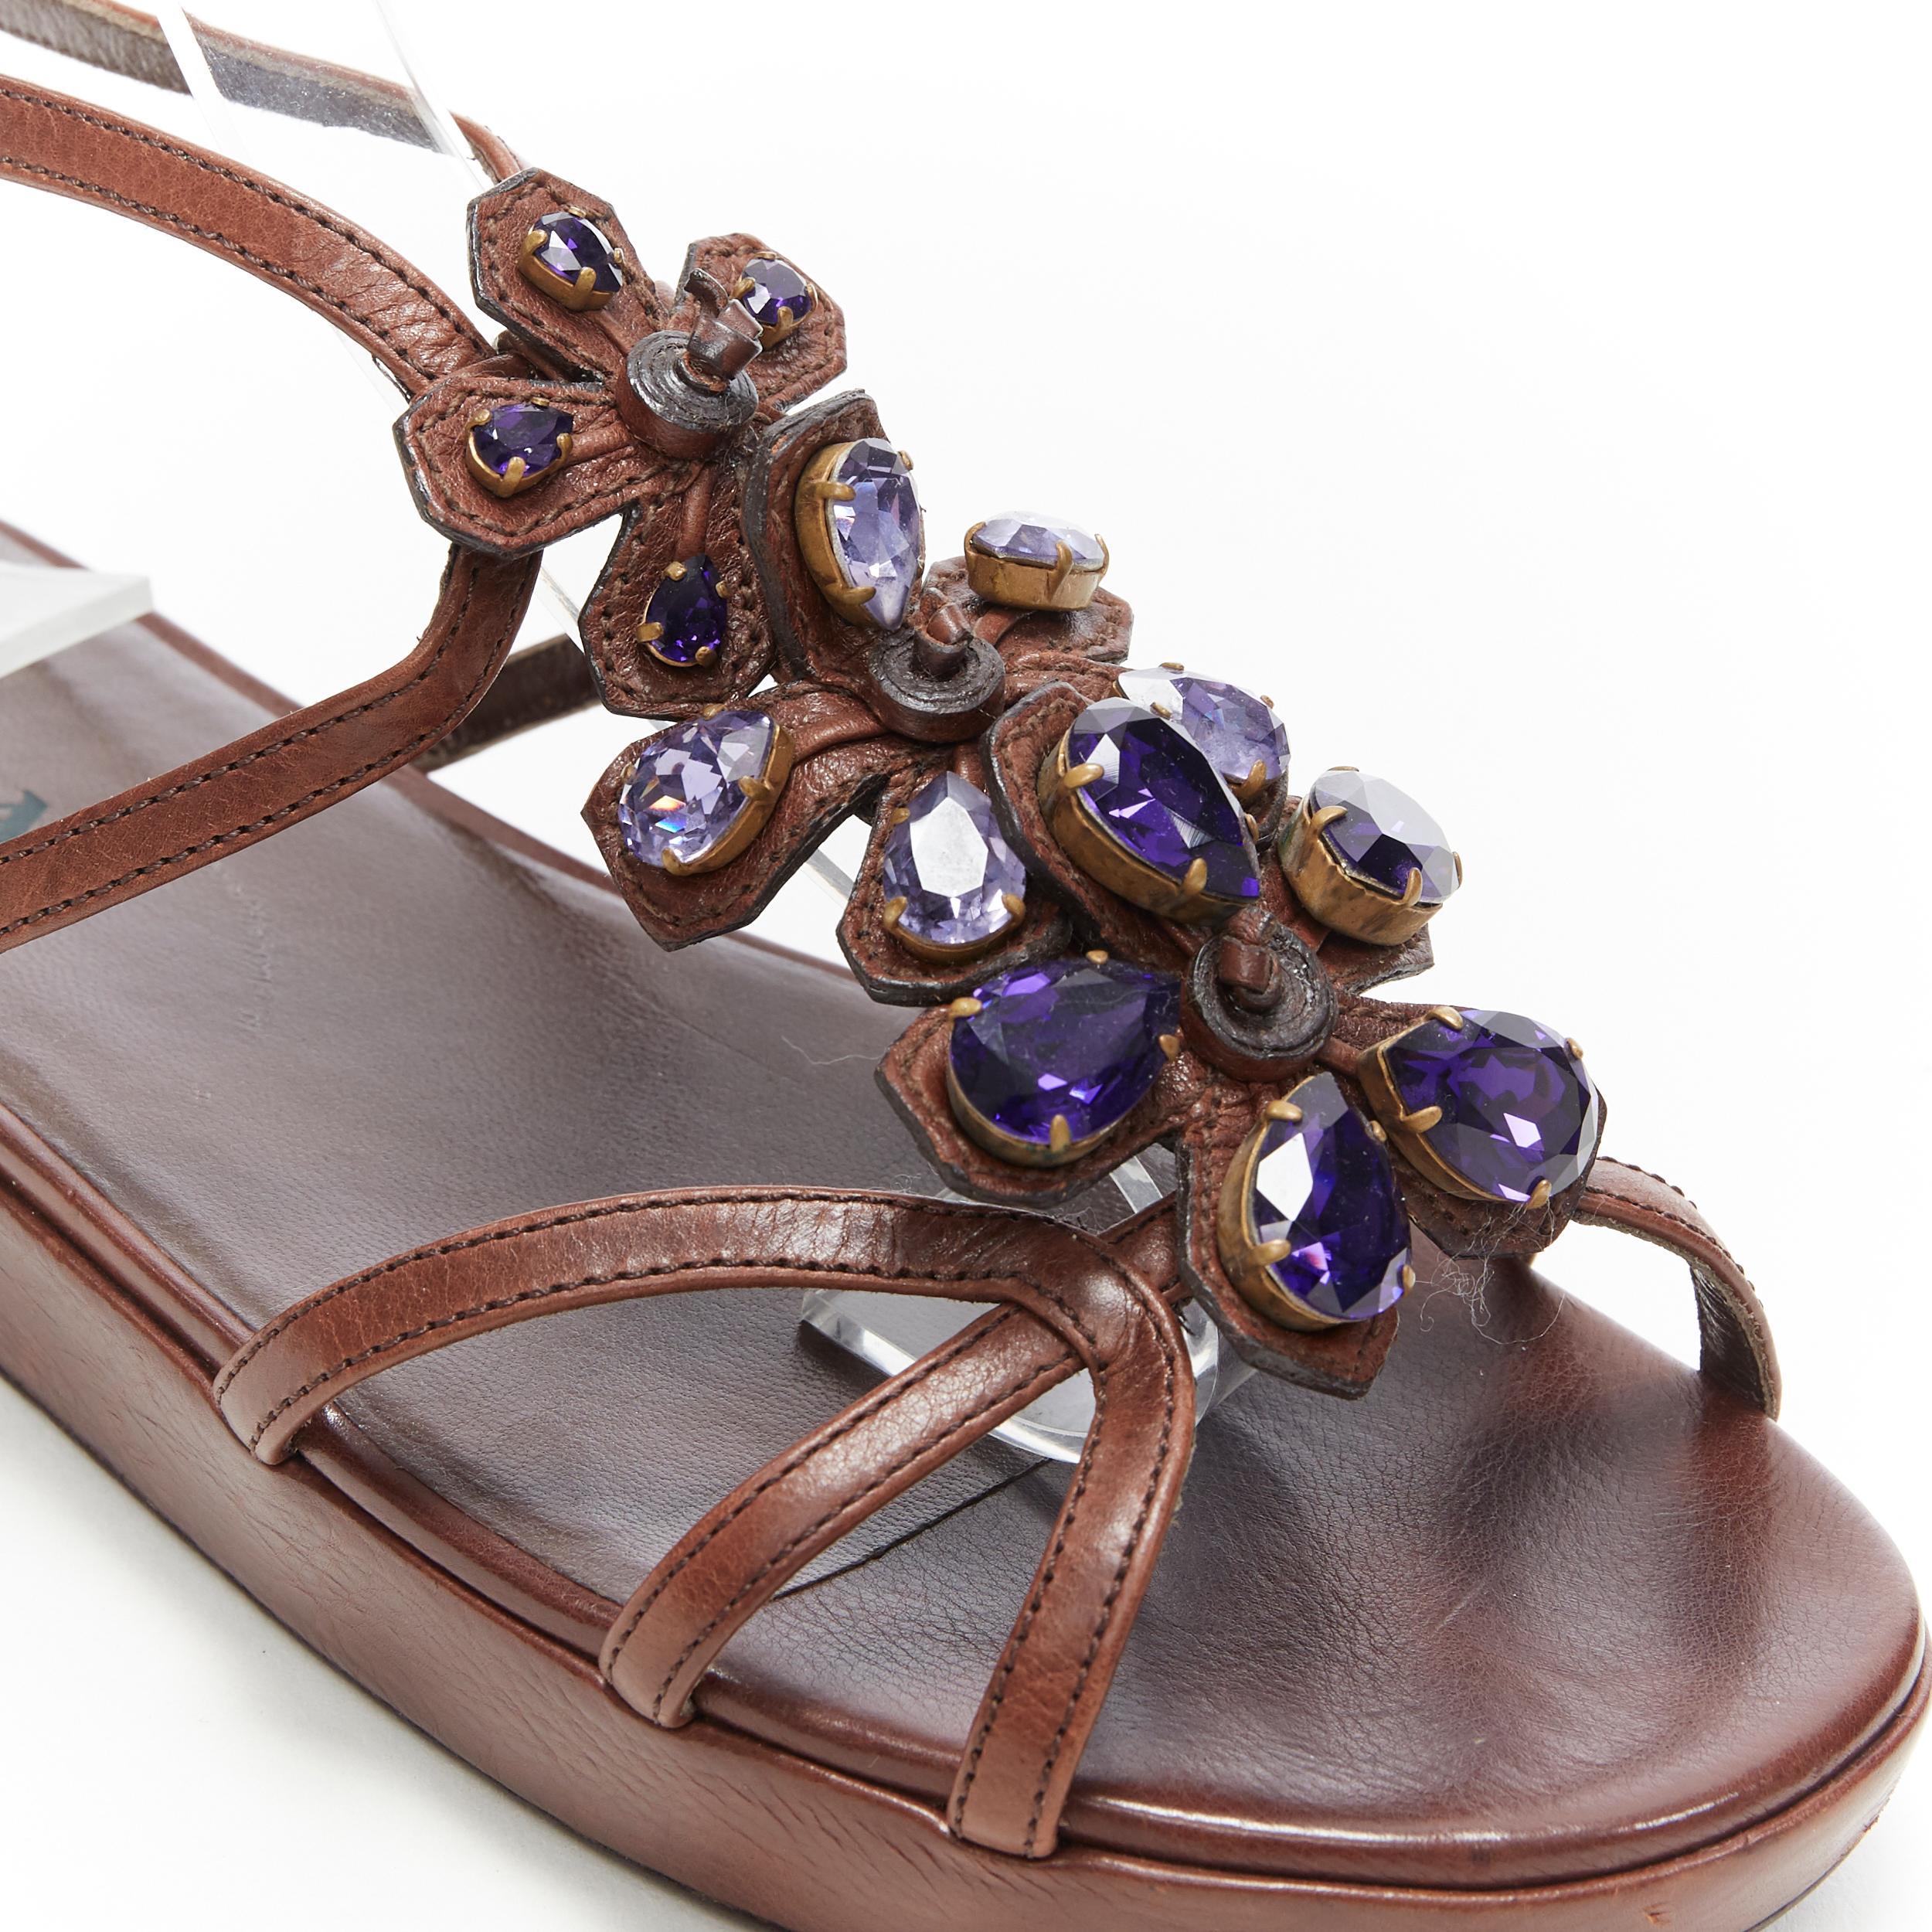 PRADA brown leather purple jewel crystal embellished flower sandals EU36.5
Brand: Prada
Designer: Miuccia Prada
Model Name / Style: Sandals
Material: Leather
Color: Brown
Pattern: Floral
Closure: Sling back
Lining material: Leather
Extra Detail: Low